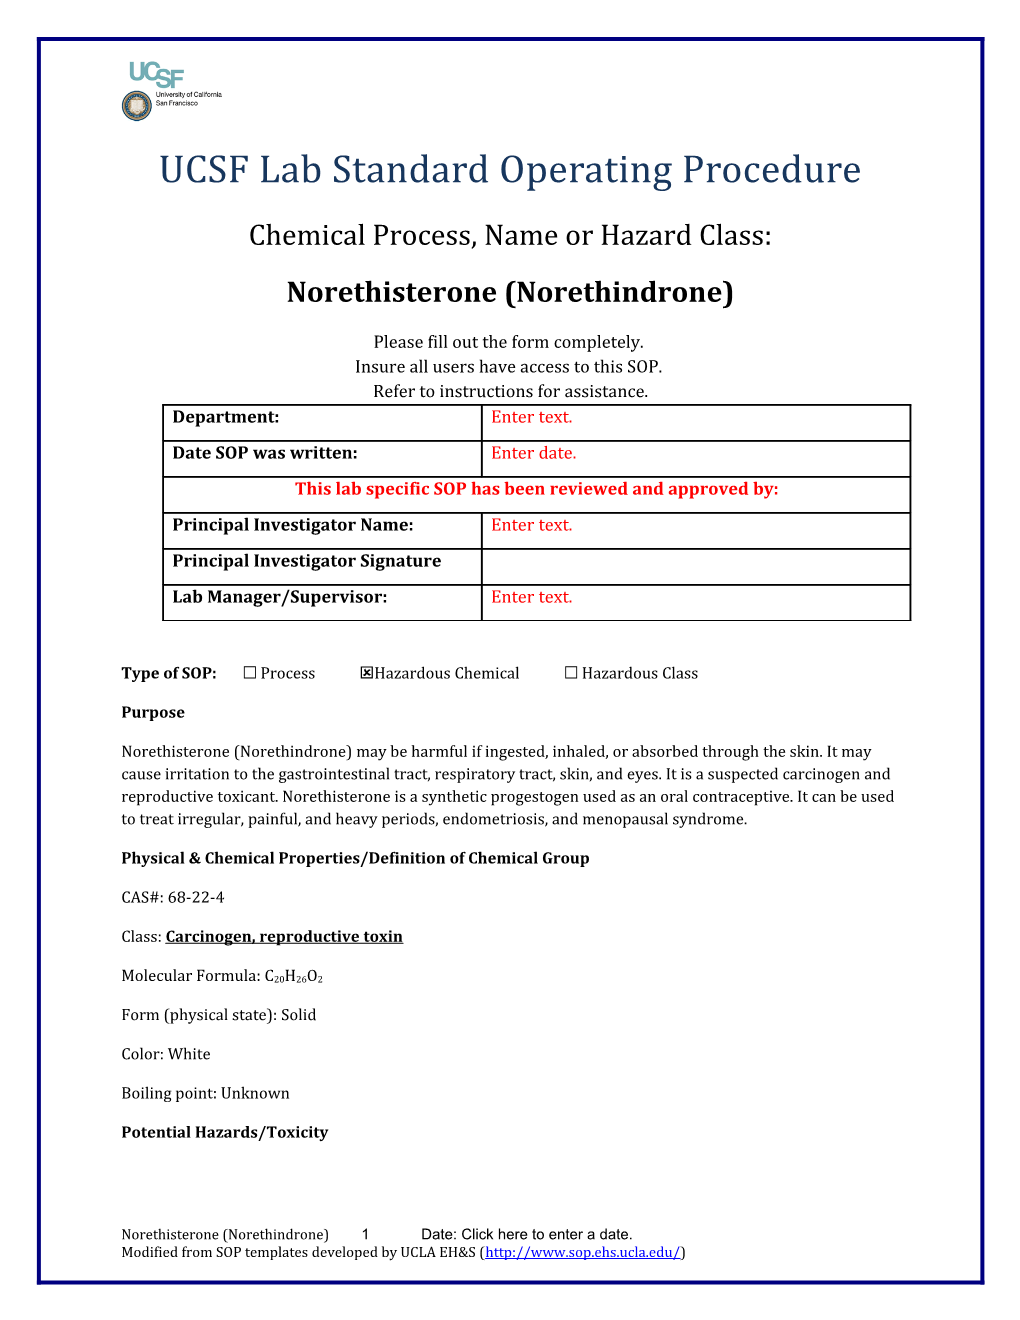 UCSF Lab Standard Operating Procedure s29